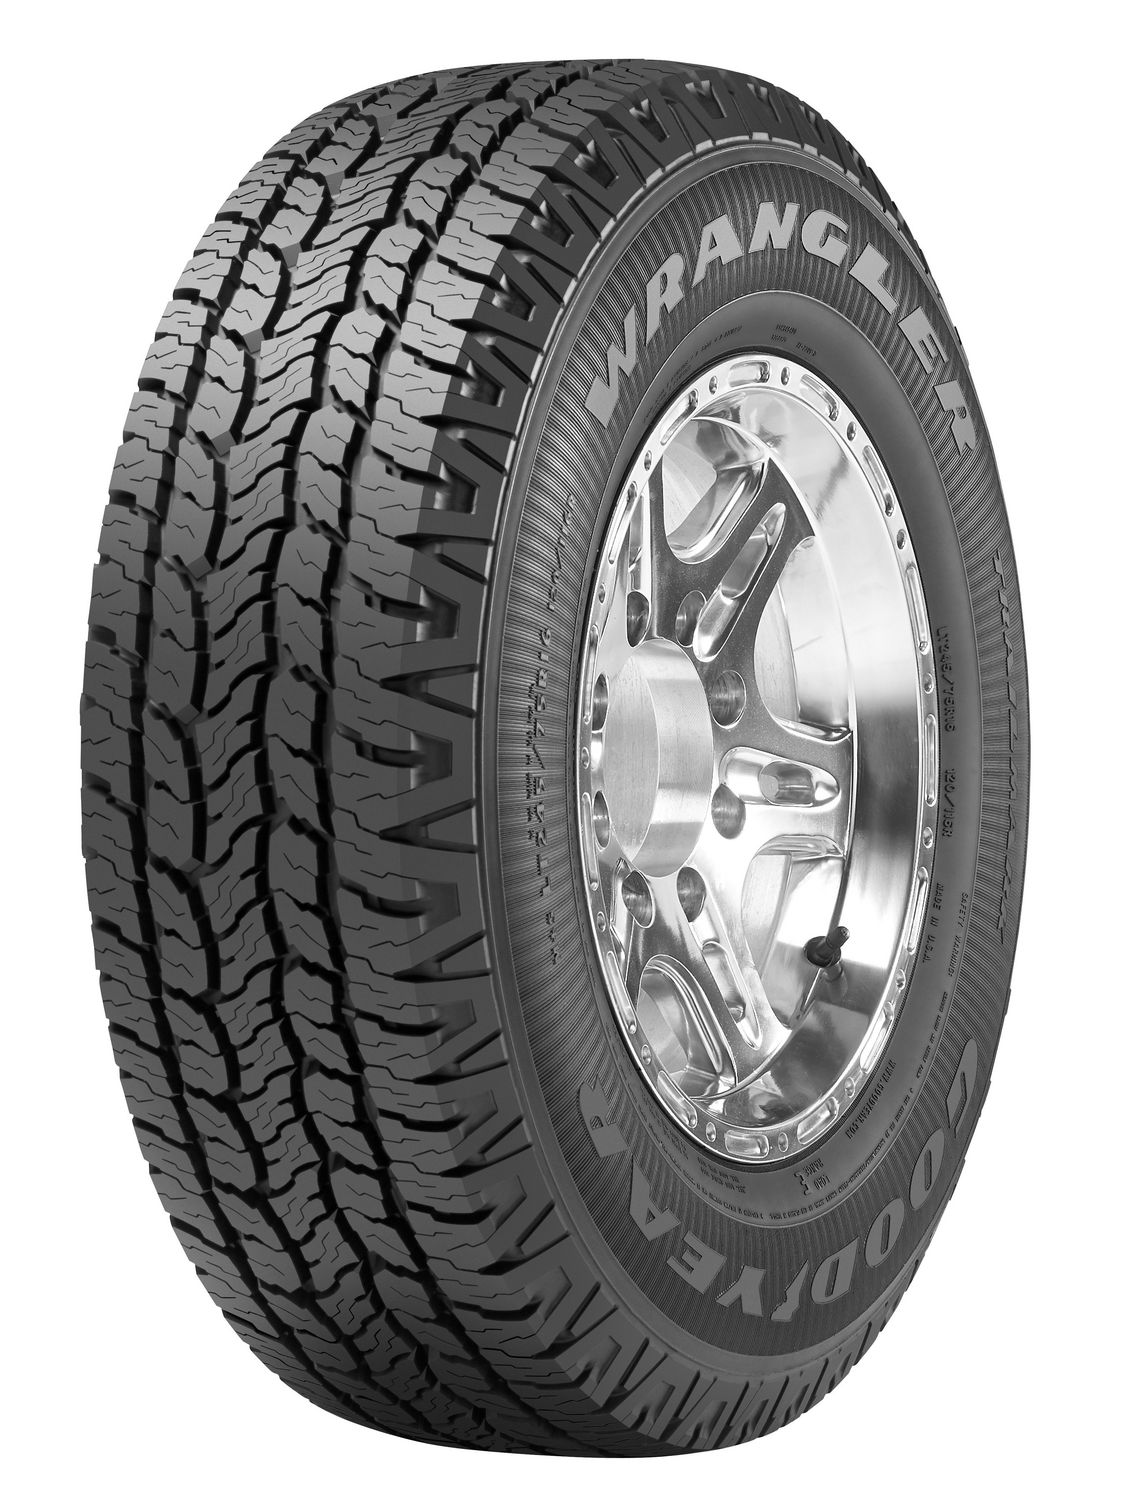 Goodyear 265/70R16 TrailMark Tire